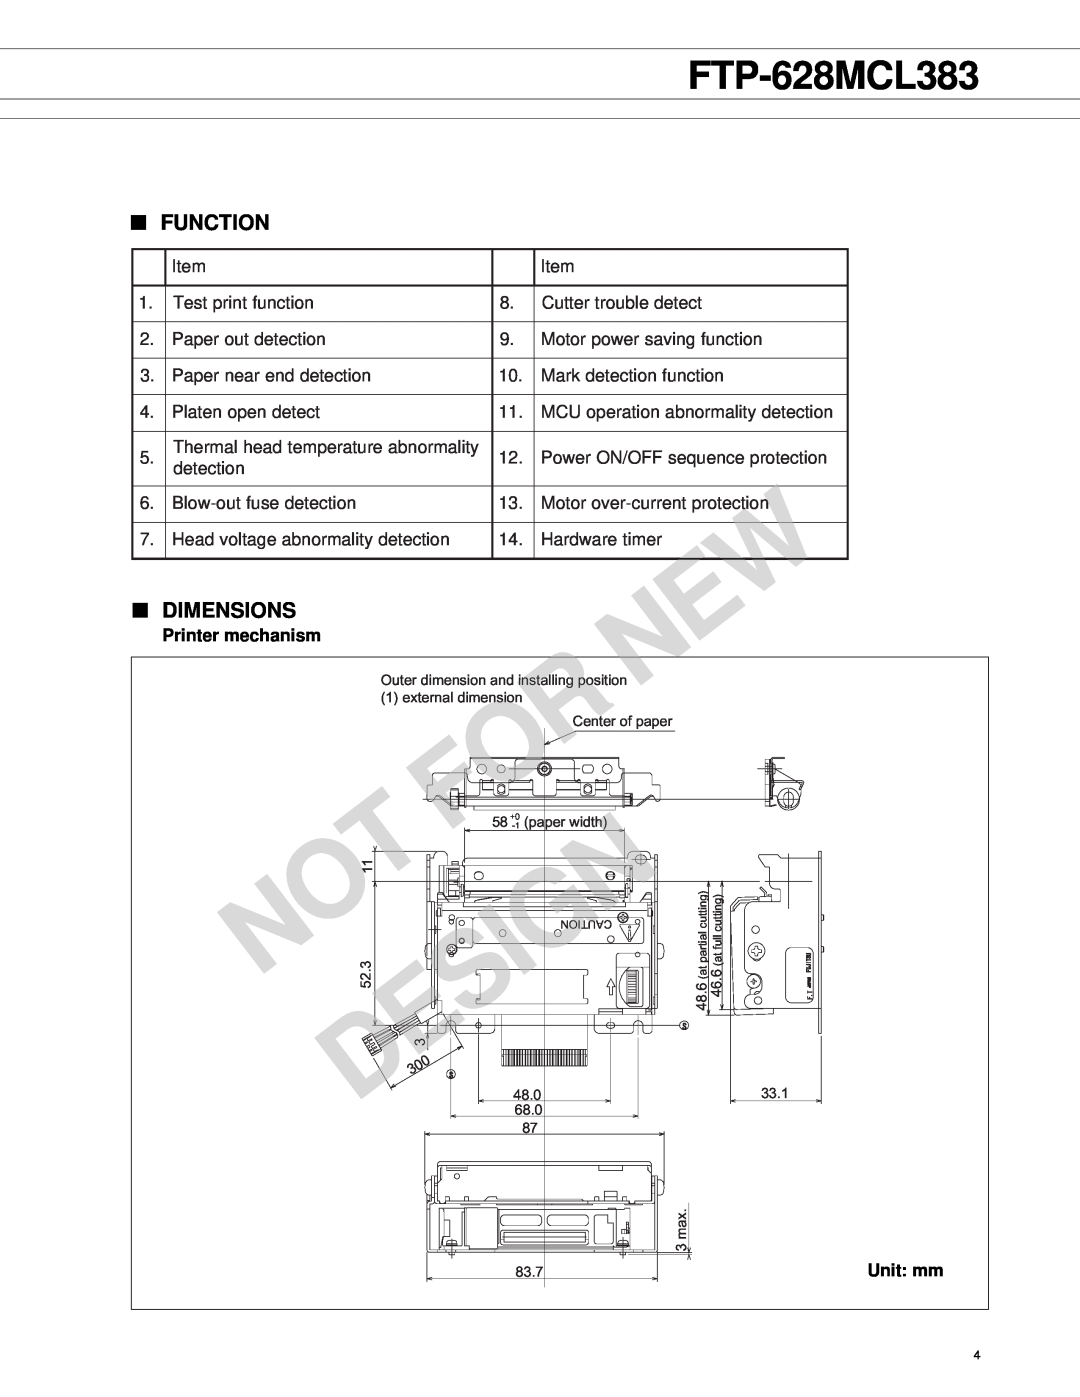 Fujitsu FTP628 MCL383 manual Function, Dimensions, Printer mechanism, Unit mm, Design, FTP-628MCL383 